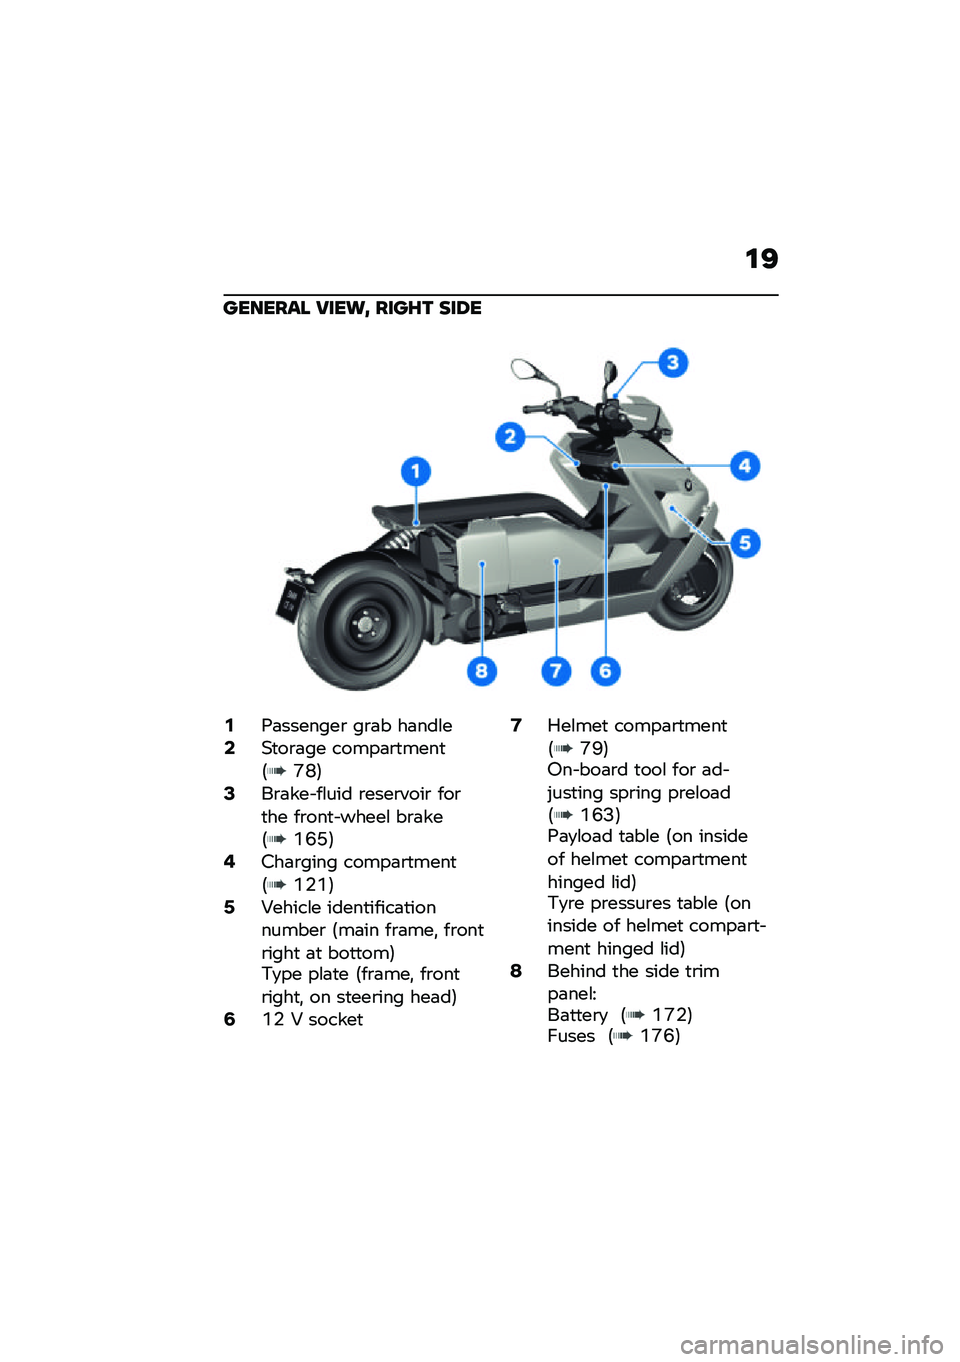 BMW MOTORRAD CE 04 2021  Riders Manual (in English) �\f�?
������� �:���\b�< ����G� ���9�
�-�9�	�������\b ��\b�	� ��	���\f��/�)�
��\b�	�� �����	�\b�
����
�7�Q�M�8�1��\b�	��� ��\f��� �\b����\b����\b ��